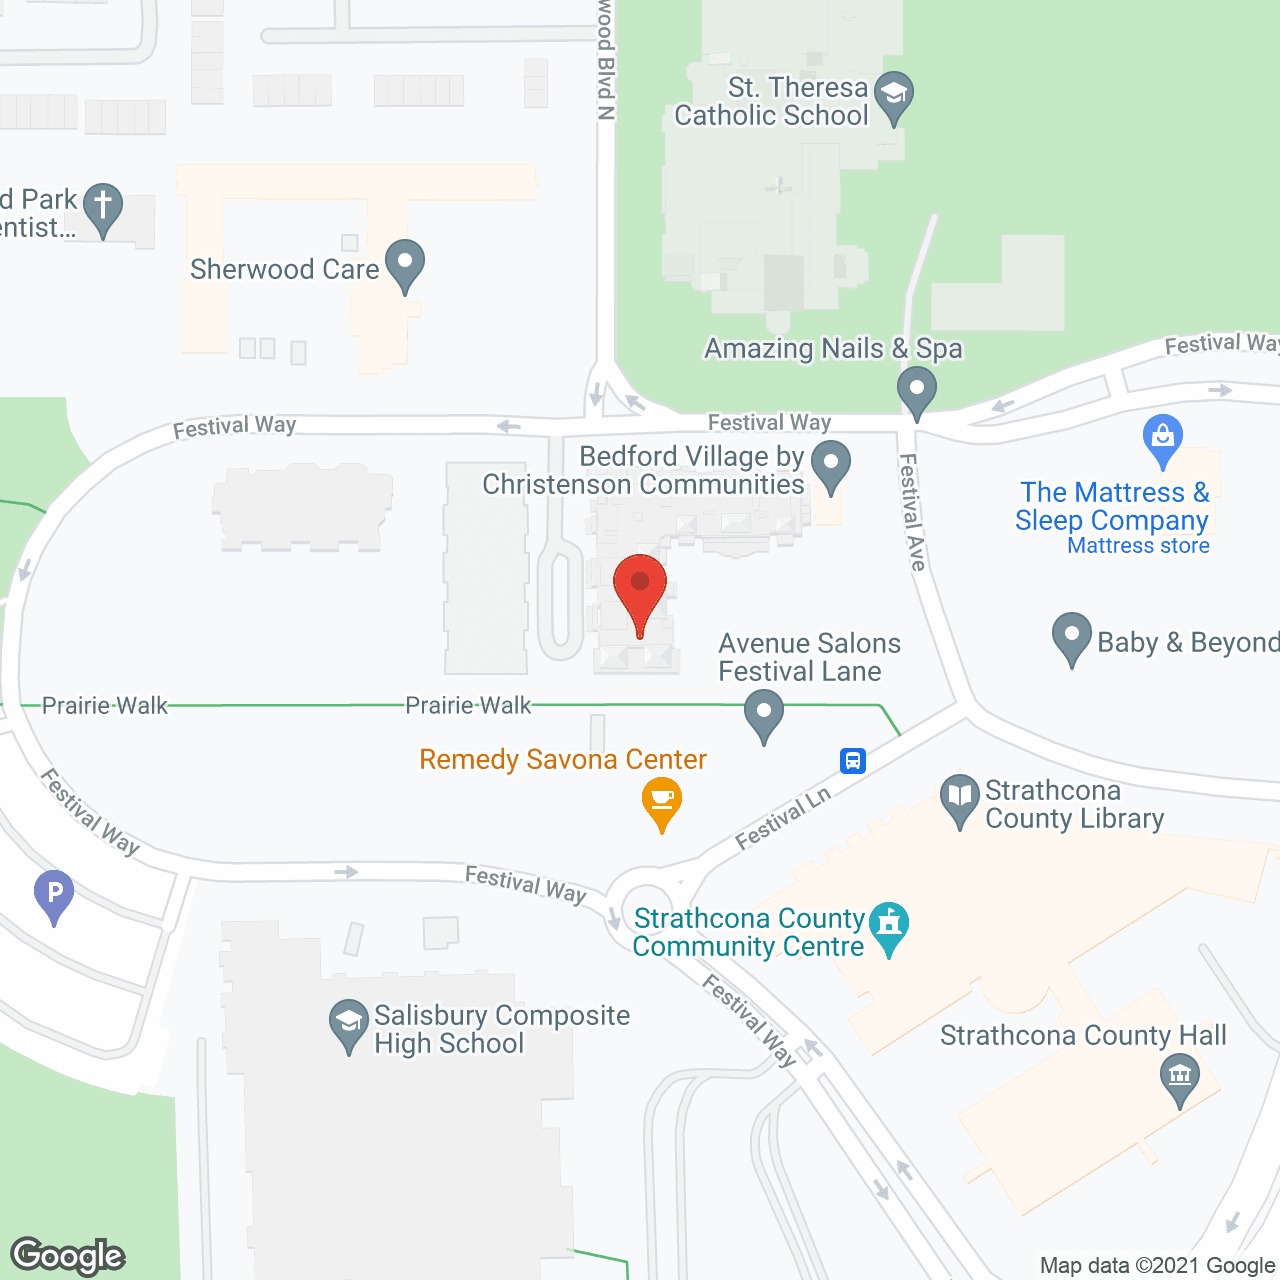 Bedford Village in google map